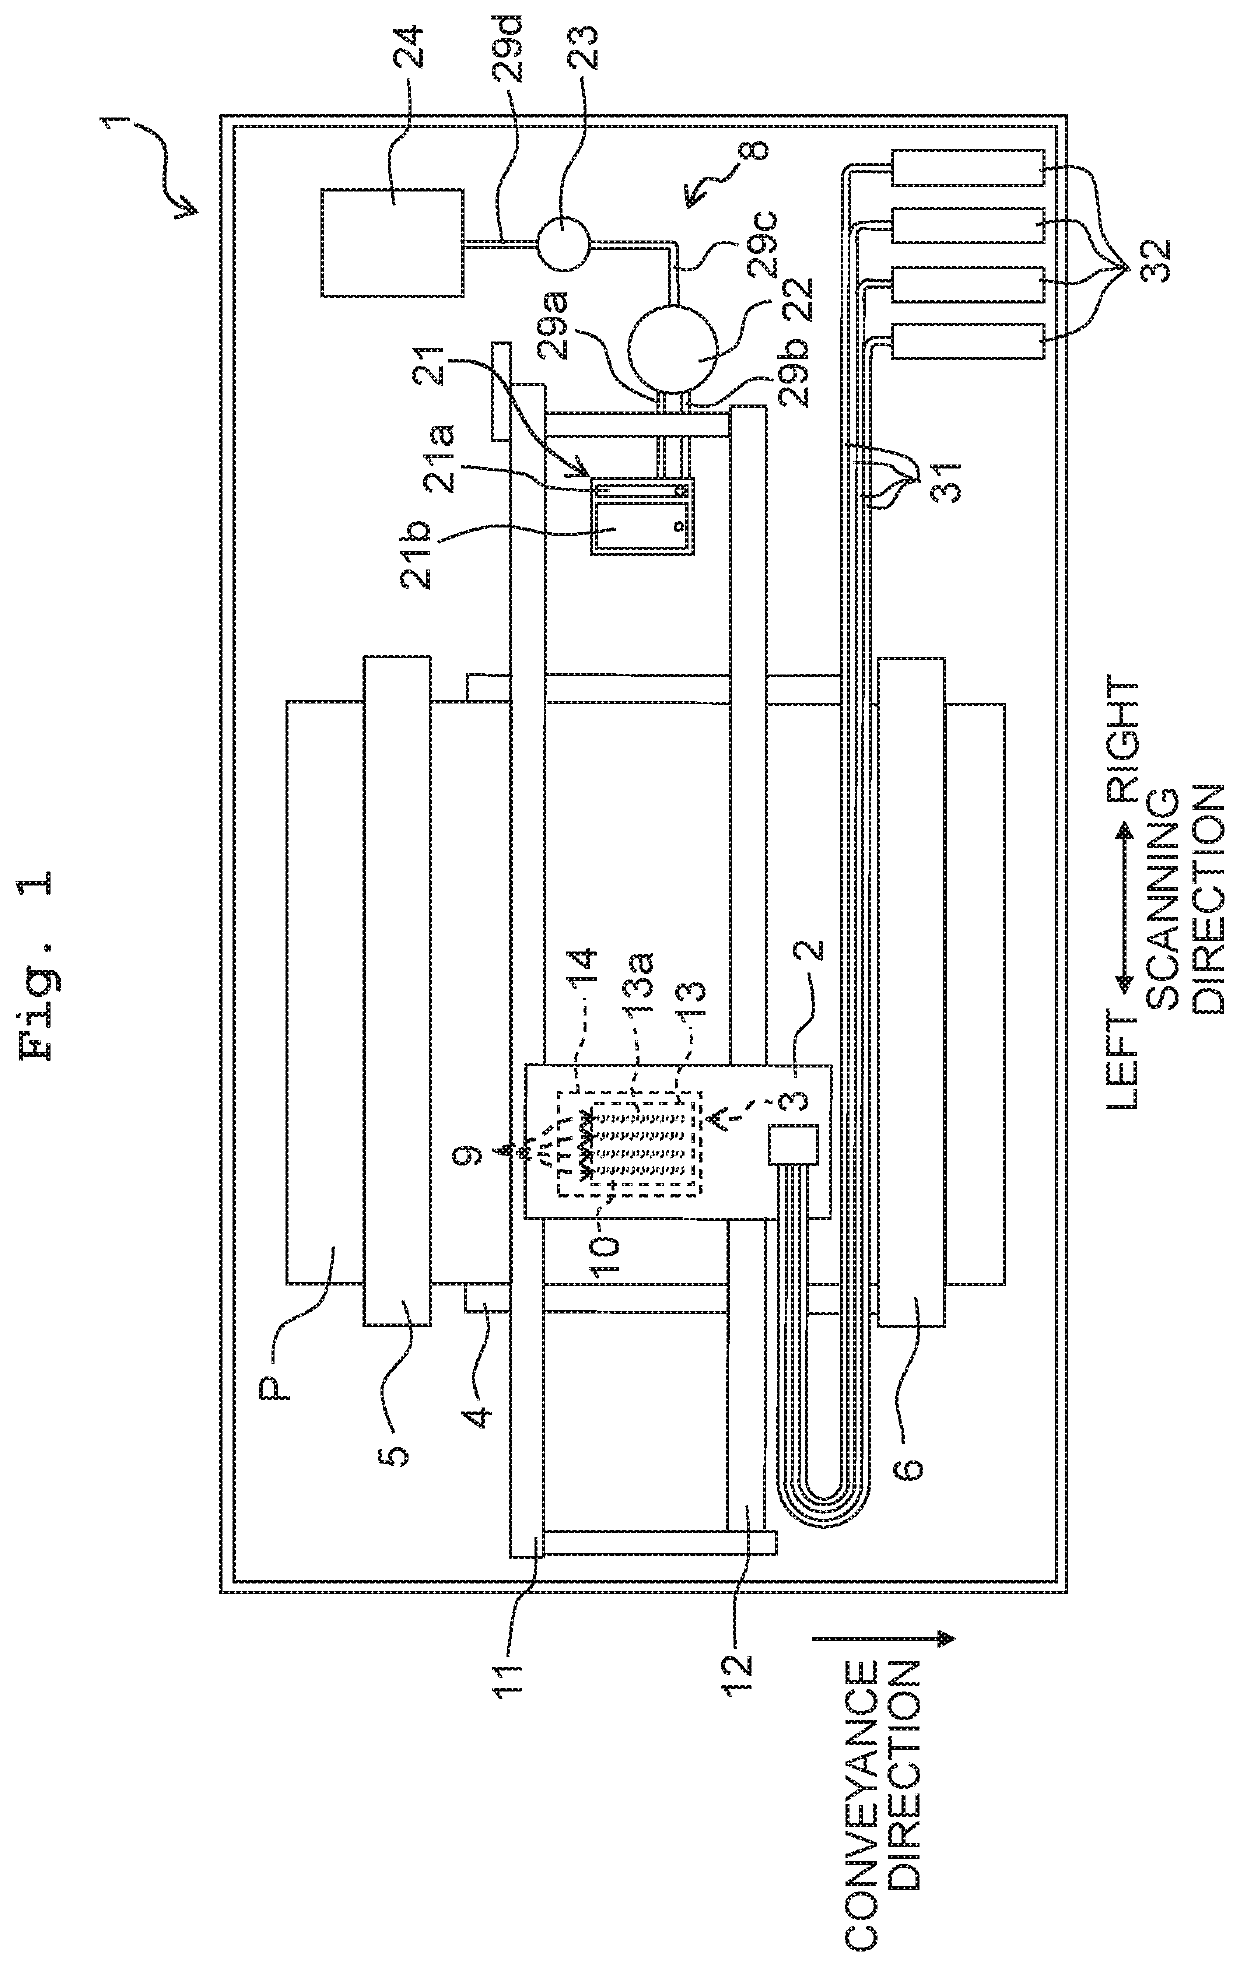 Liquid jetting apparatus including purge mechanism